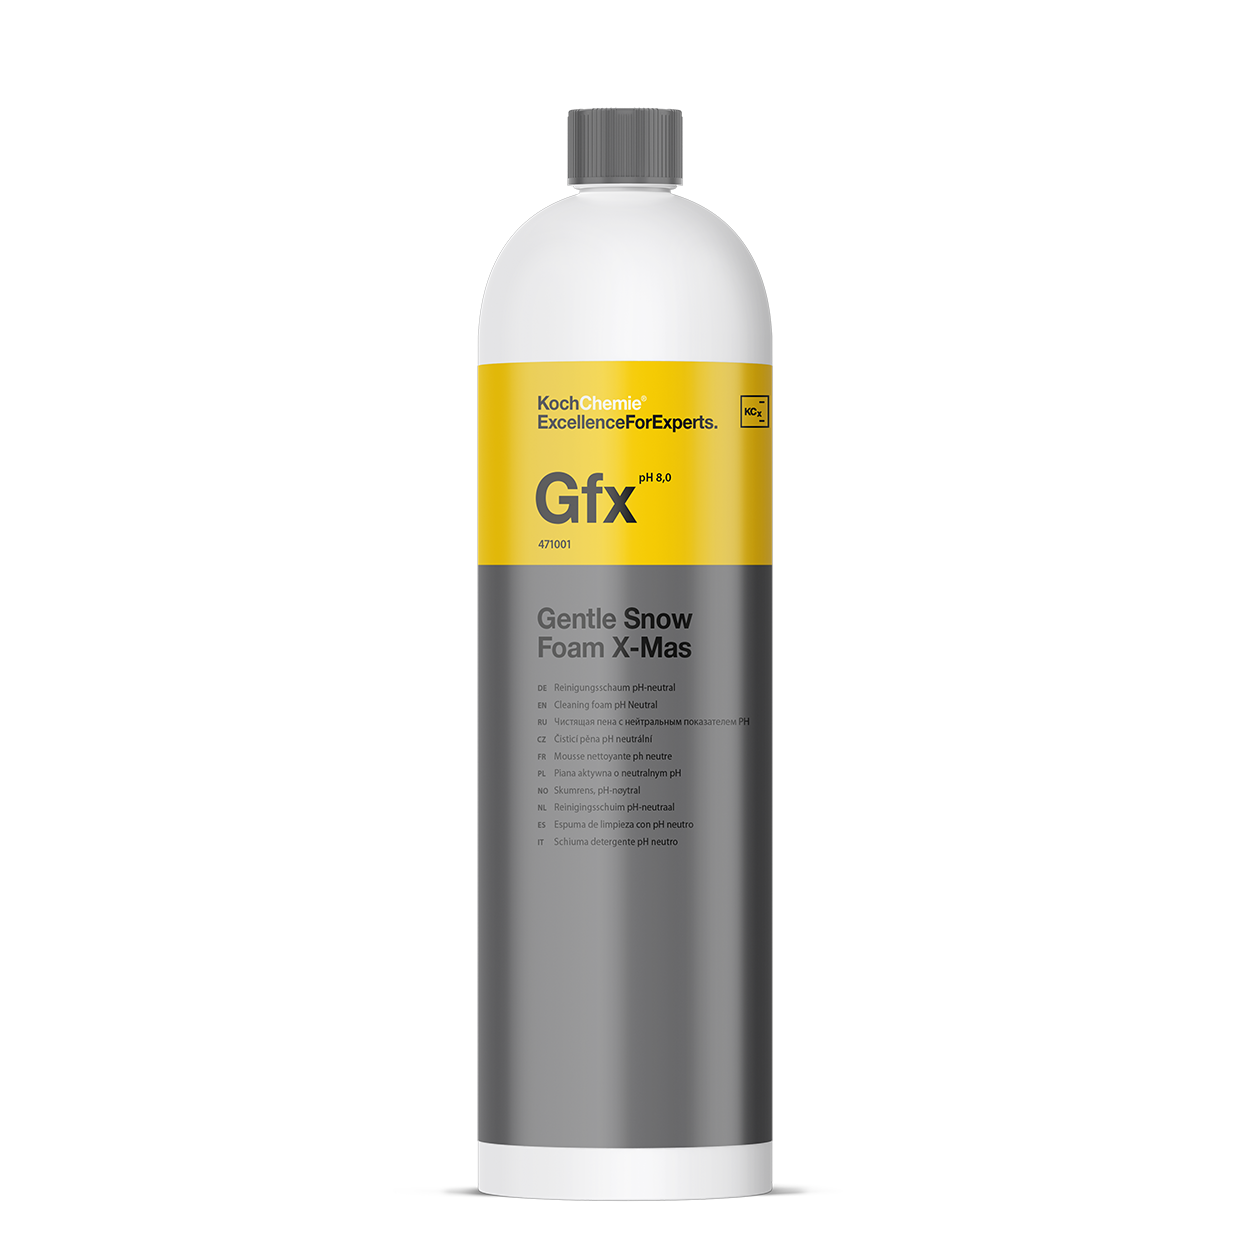 Koch Chemie Gentle Snow Foam X Mas | GFX